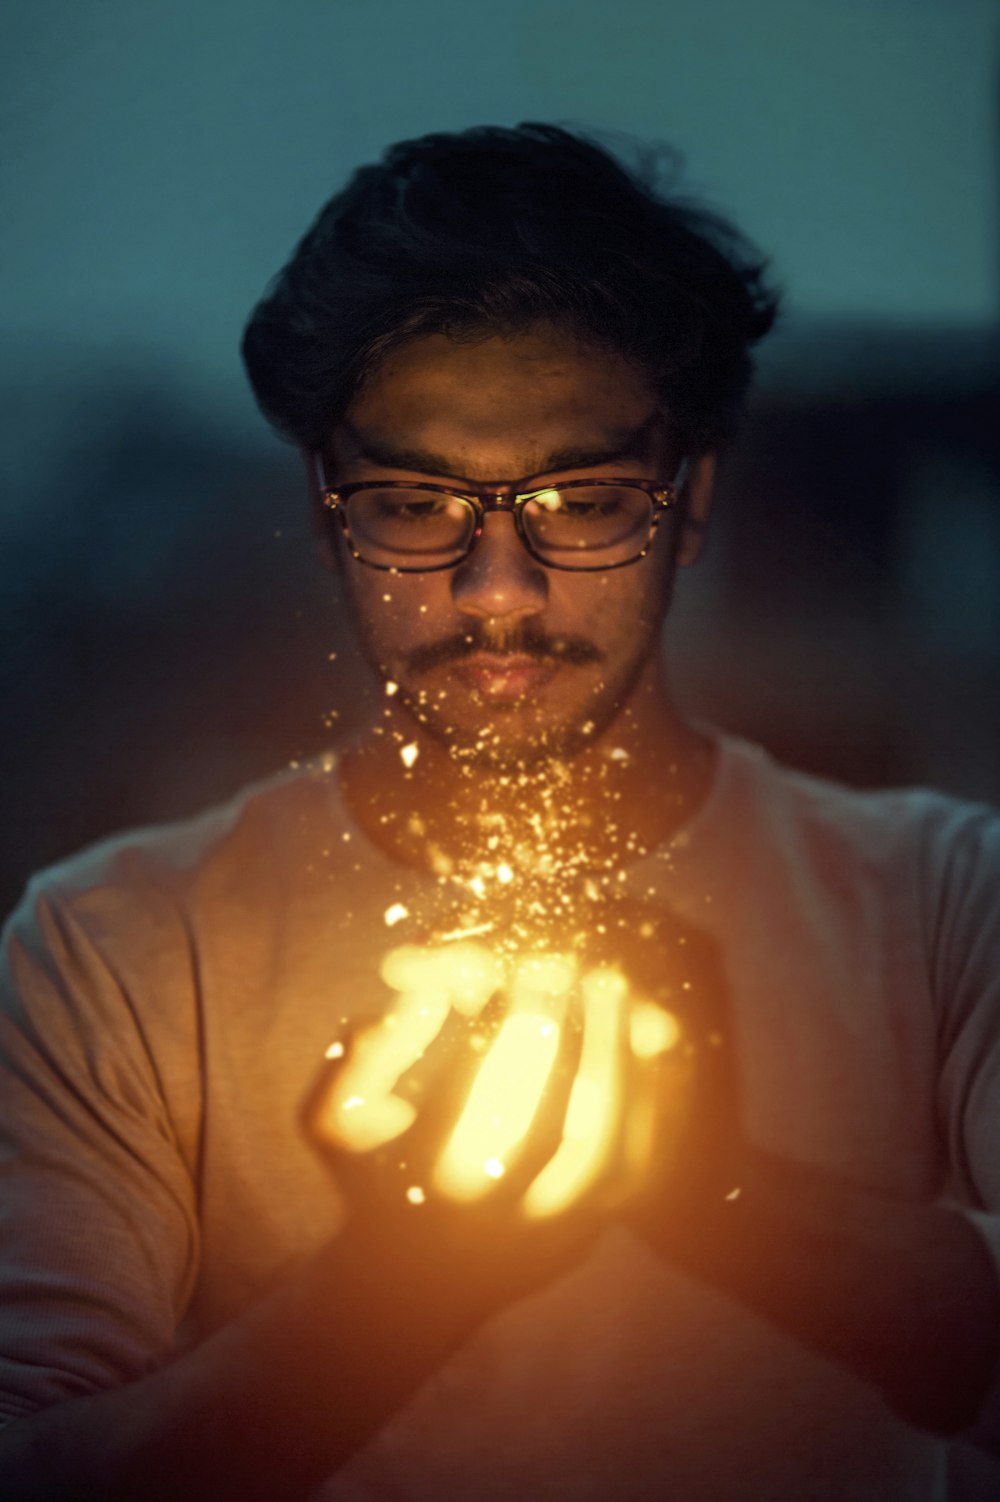 man holding lighted art